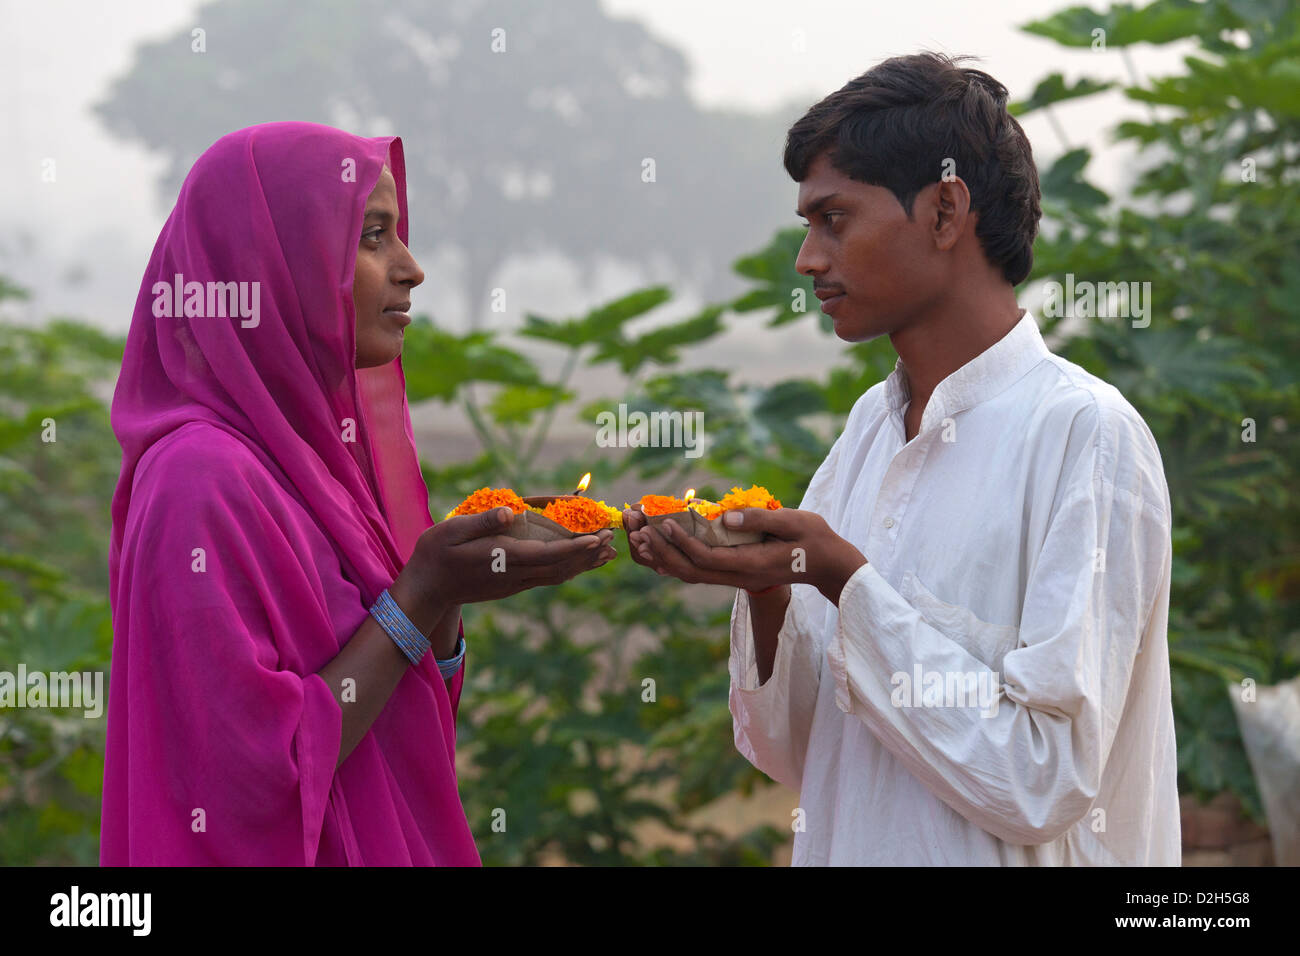 india, Uttar Pradesh, young hindu man and woman holding prayer lamp and marigolds Stock Photo